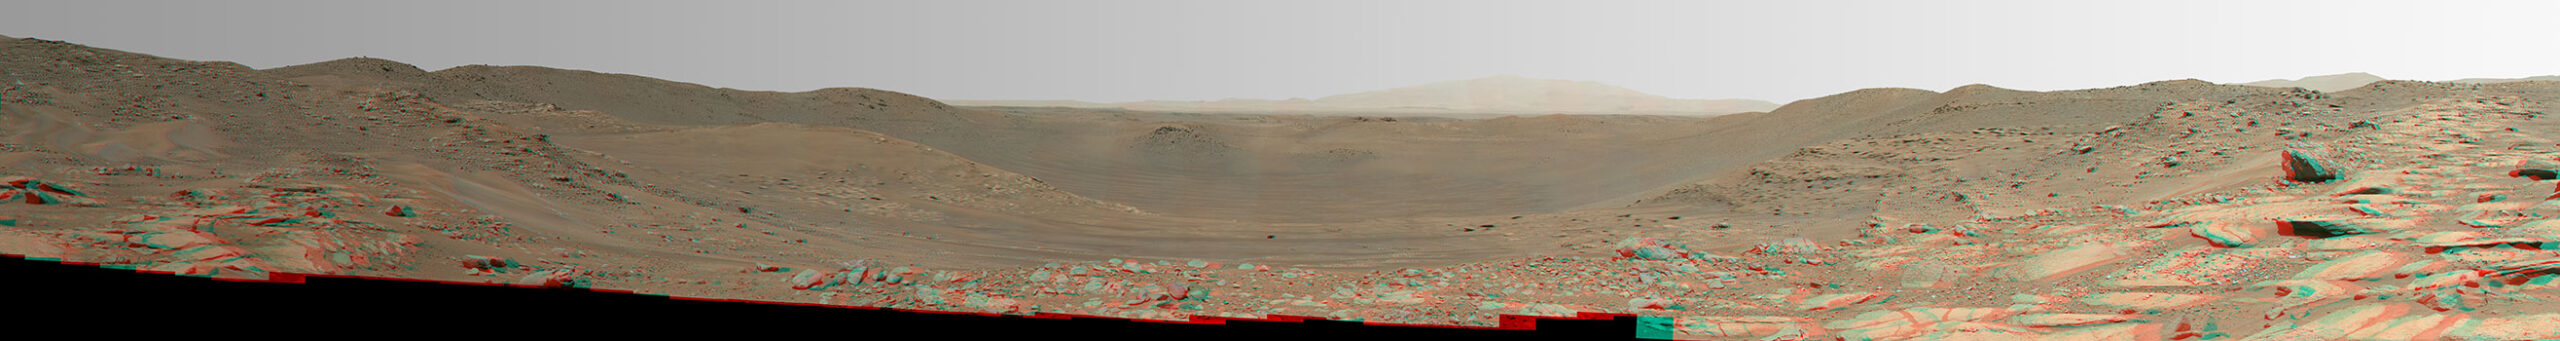 Анаглиф панорамы кратера Бельва